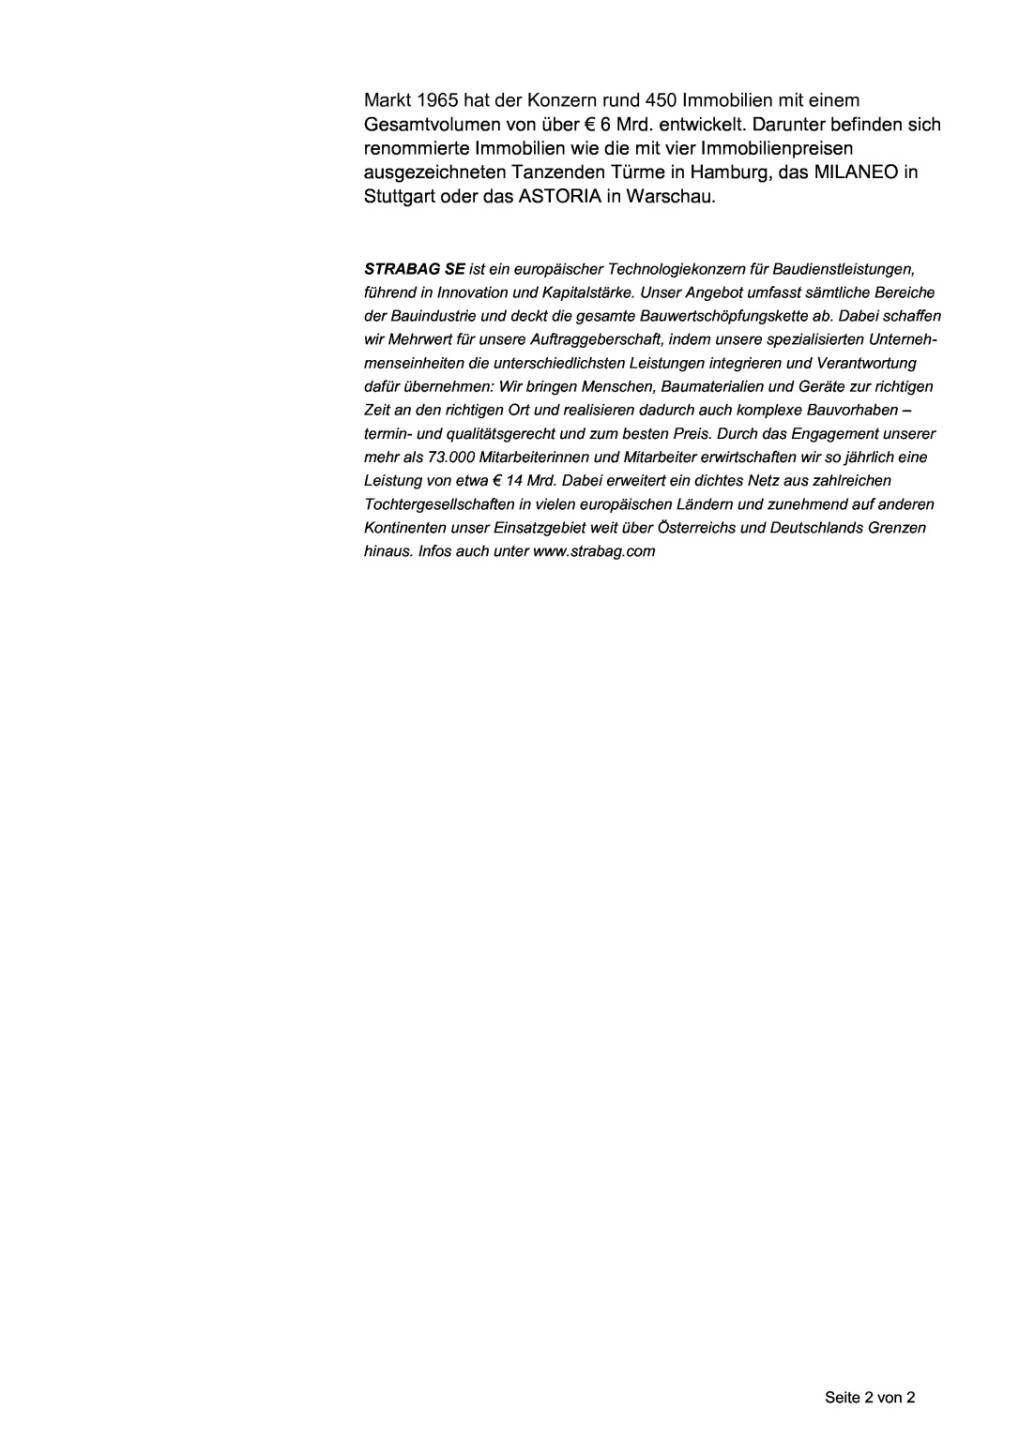 Strabag erhöht Anteil an Raiffeisen evolution auf 100 Prozent, Seite 2/2, komplettes Dokument unter http://boerse-social.com/static/uploads/file_1785_strabag_erhoht_anteil_an_raiffeisen_evolution_auf_100_prozent.pdf